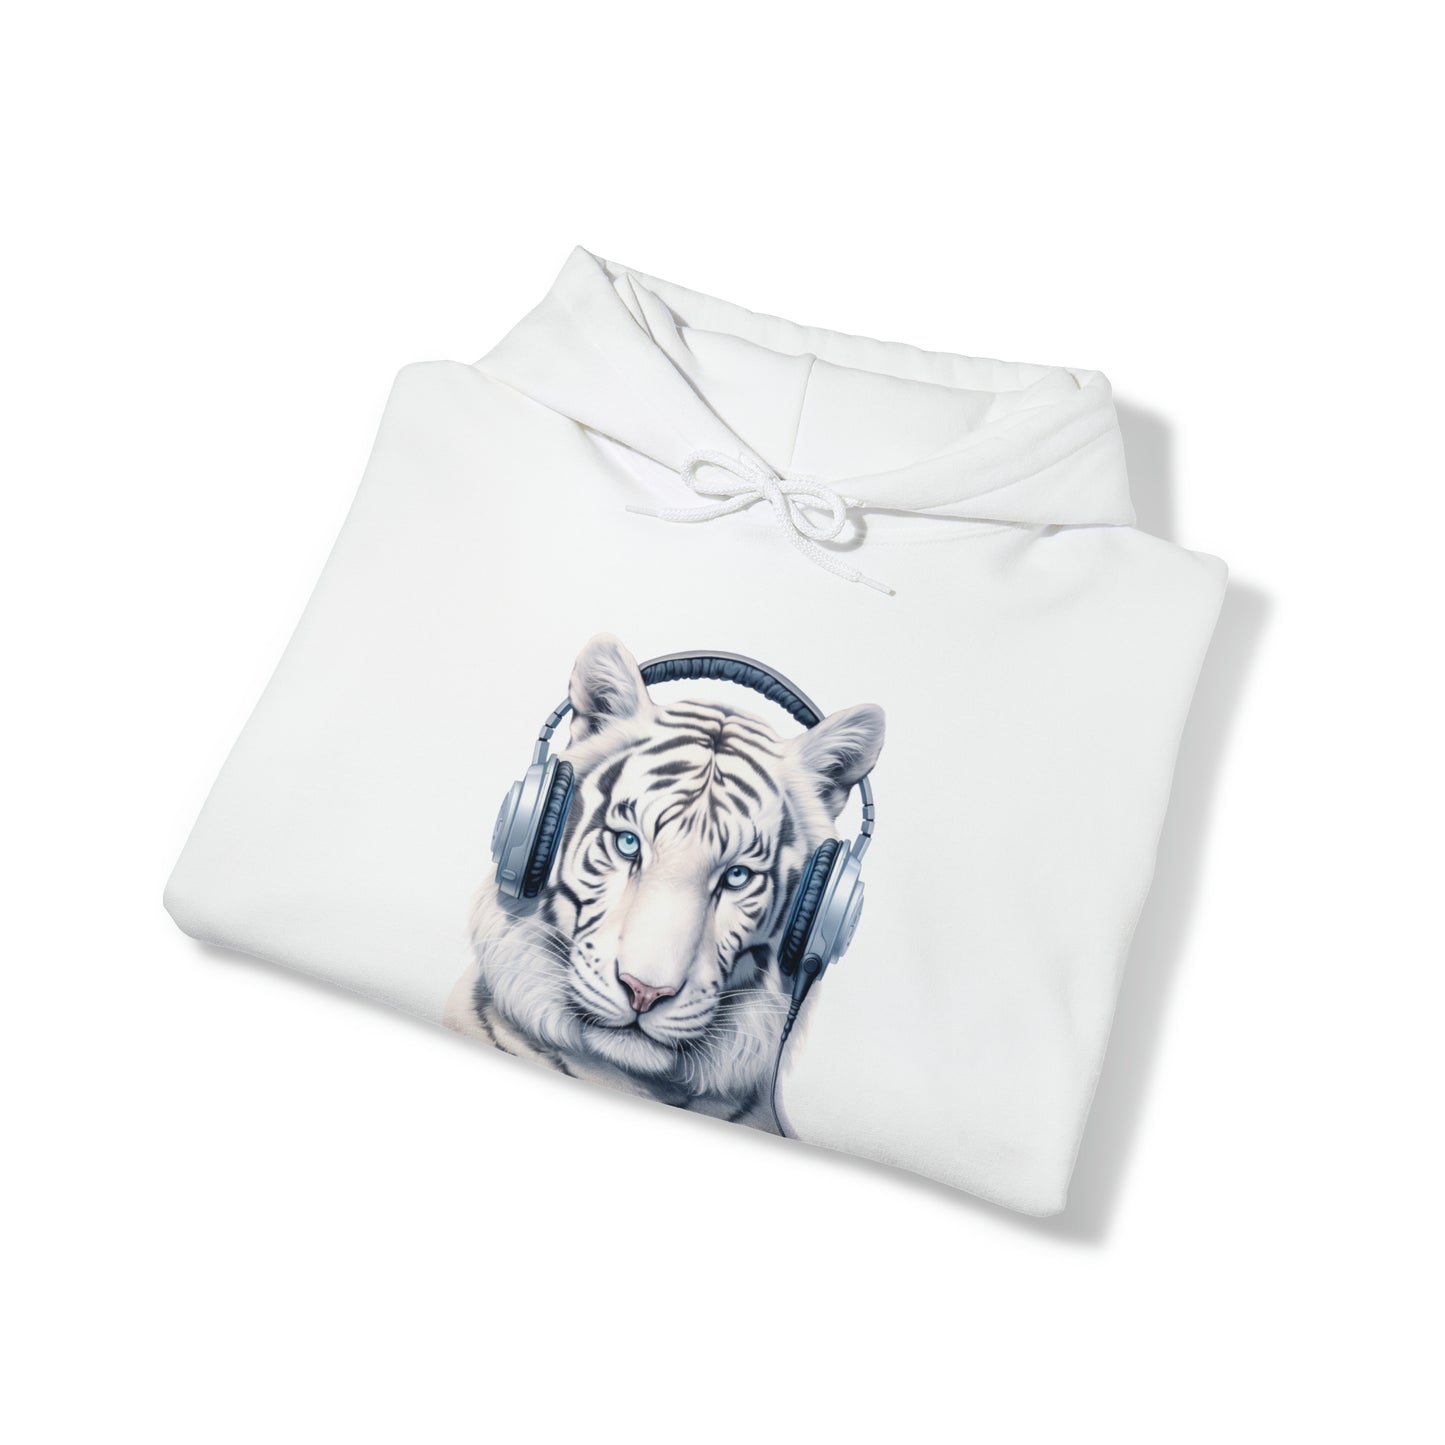 Tiger White Headphones | Unisex Heavy Blend™ Hooded Sweatshirt